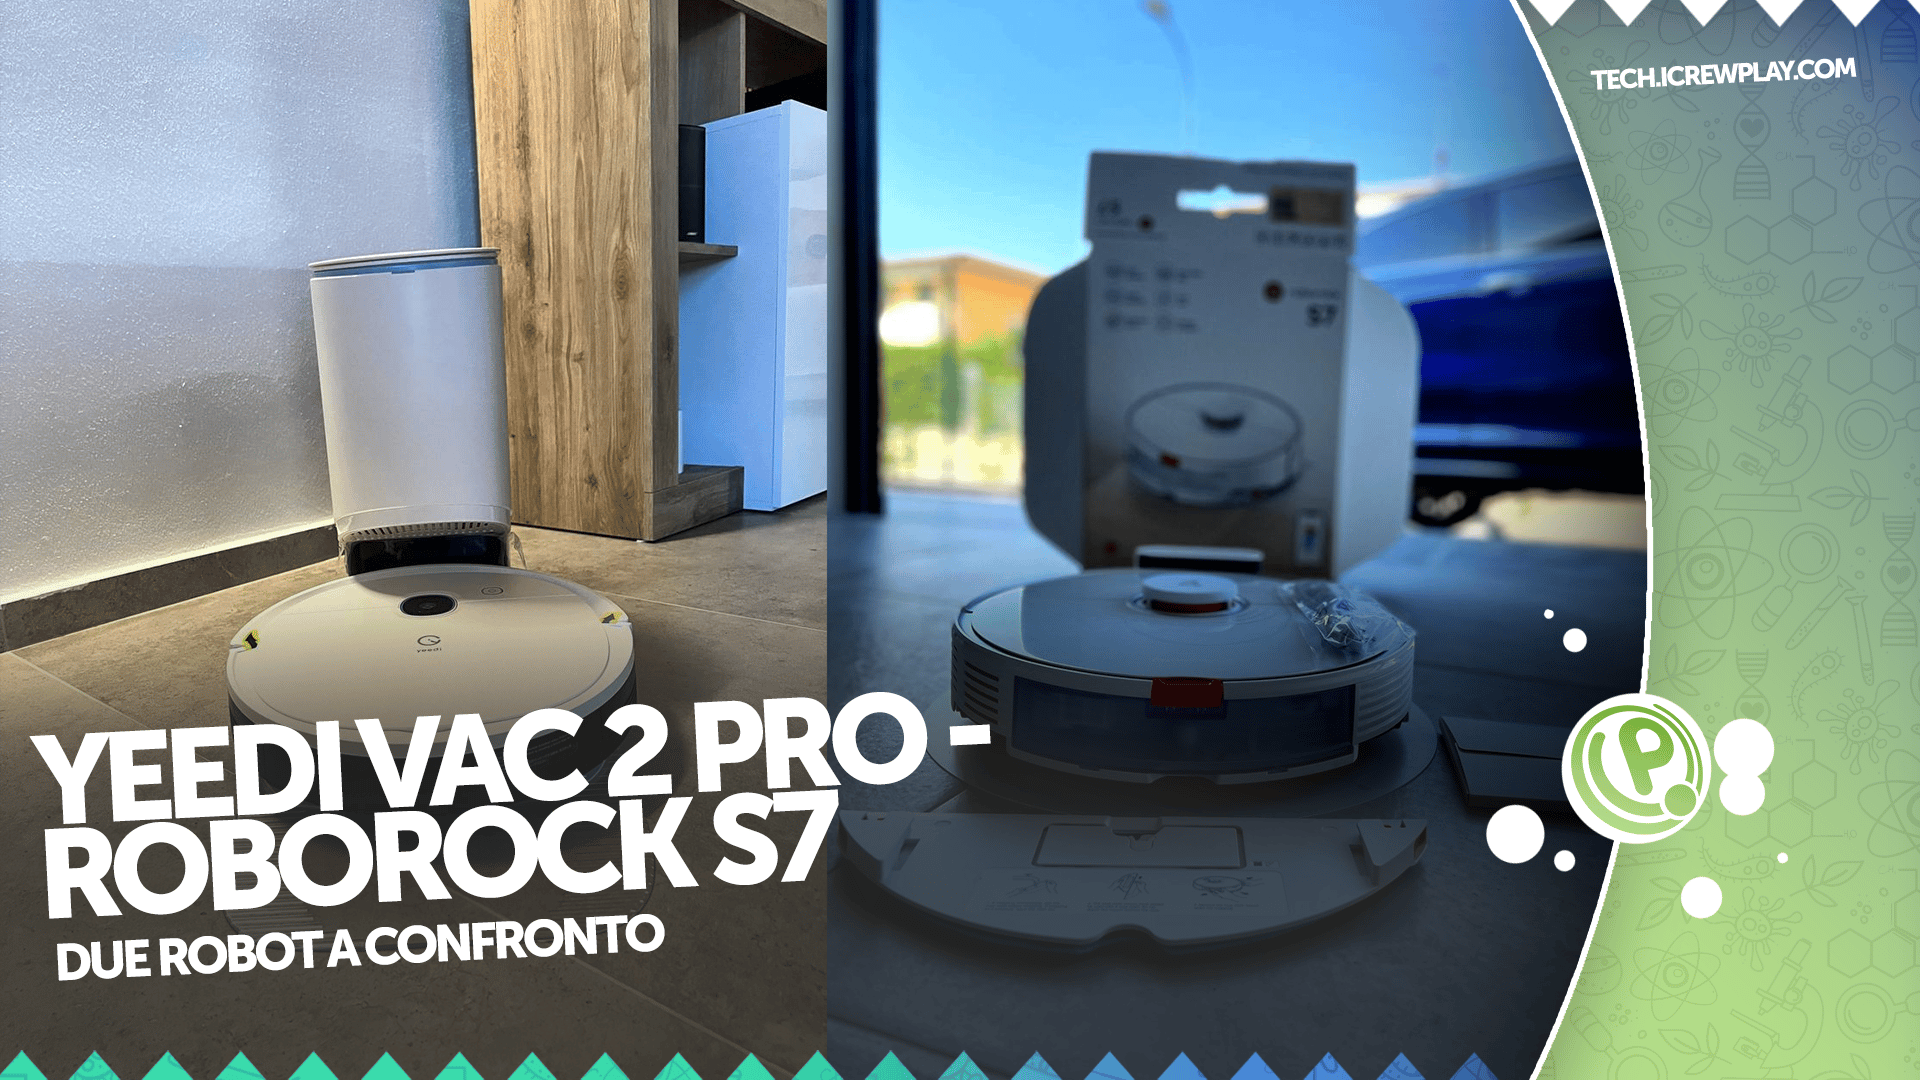 Roborock s7 Yeedi Vac 2 Pro